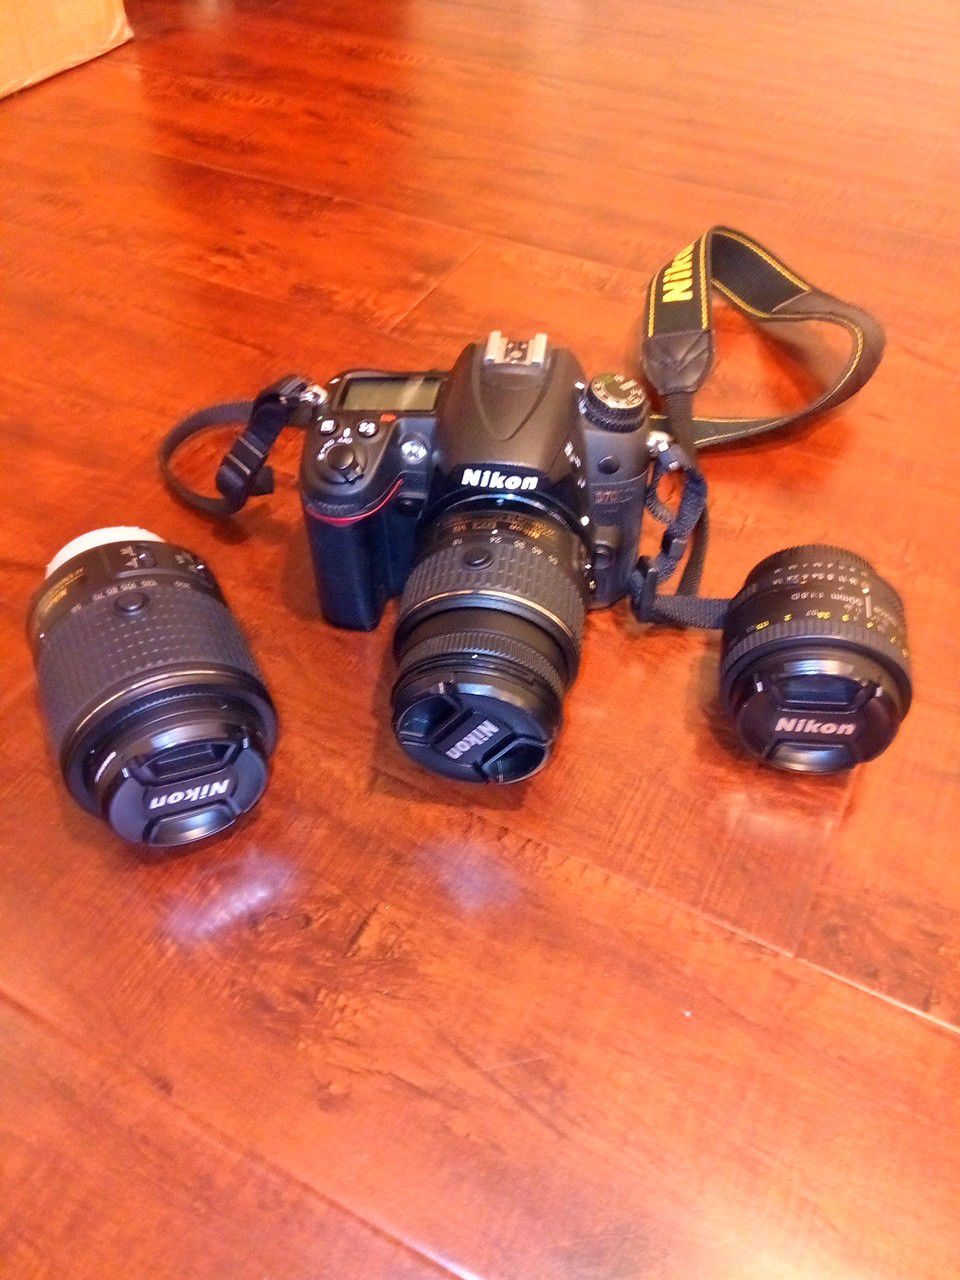 Nikon D7000 with three lenses